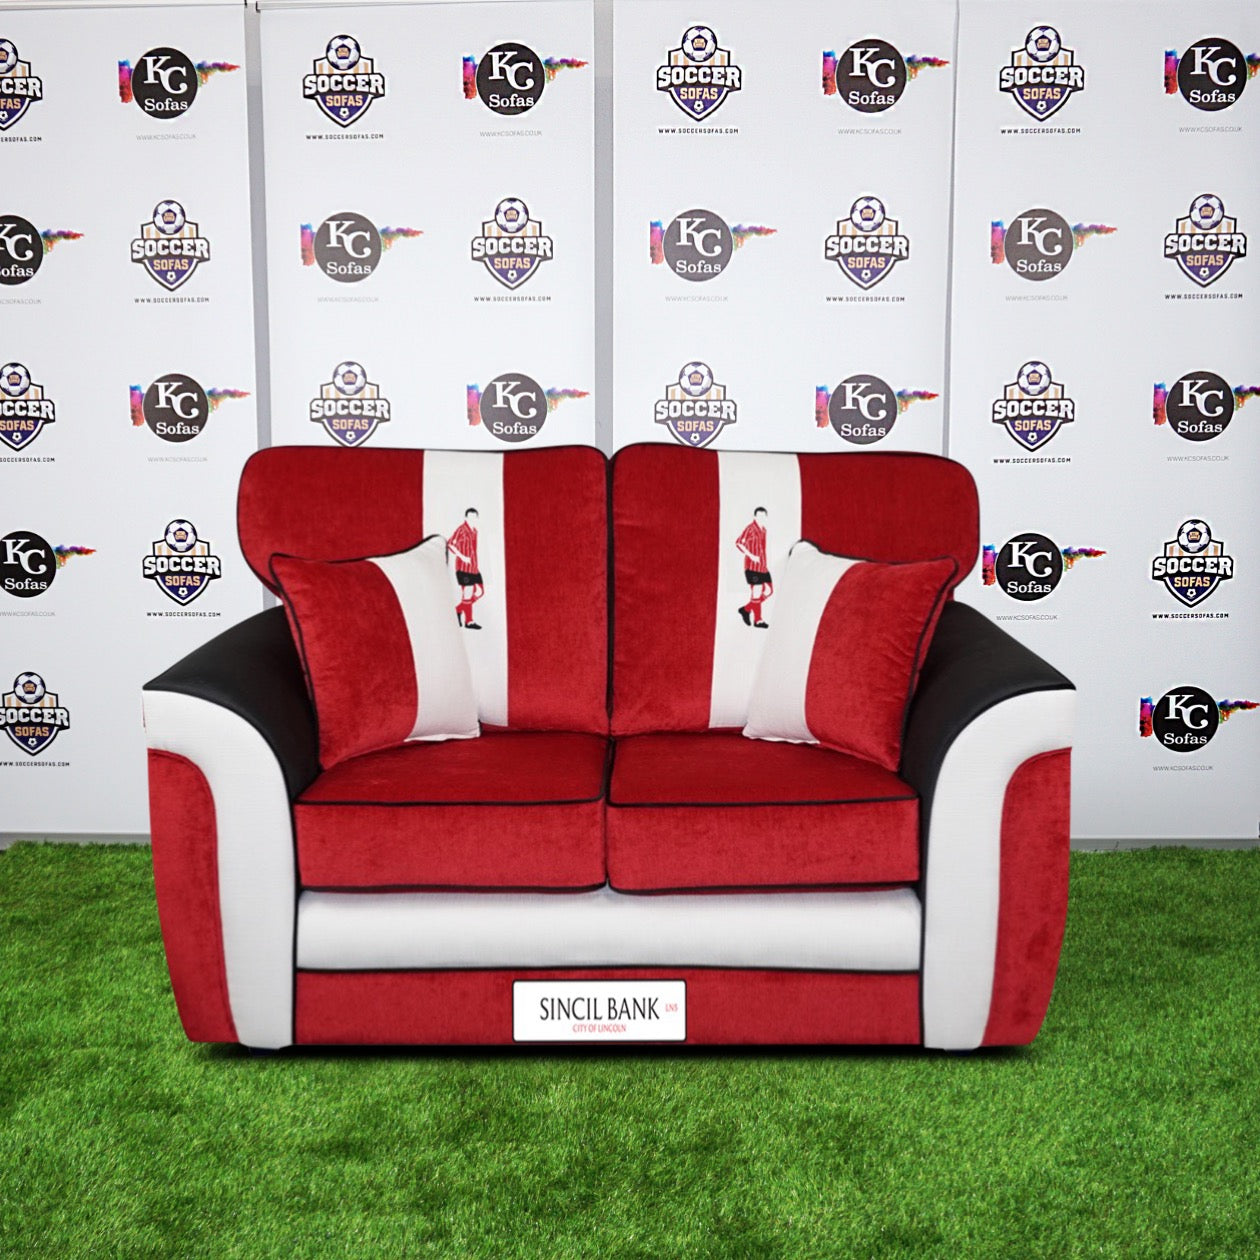 Sincil Bank 2 Seater Sofa (Lincoln City FC)